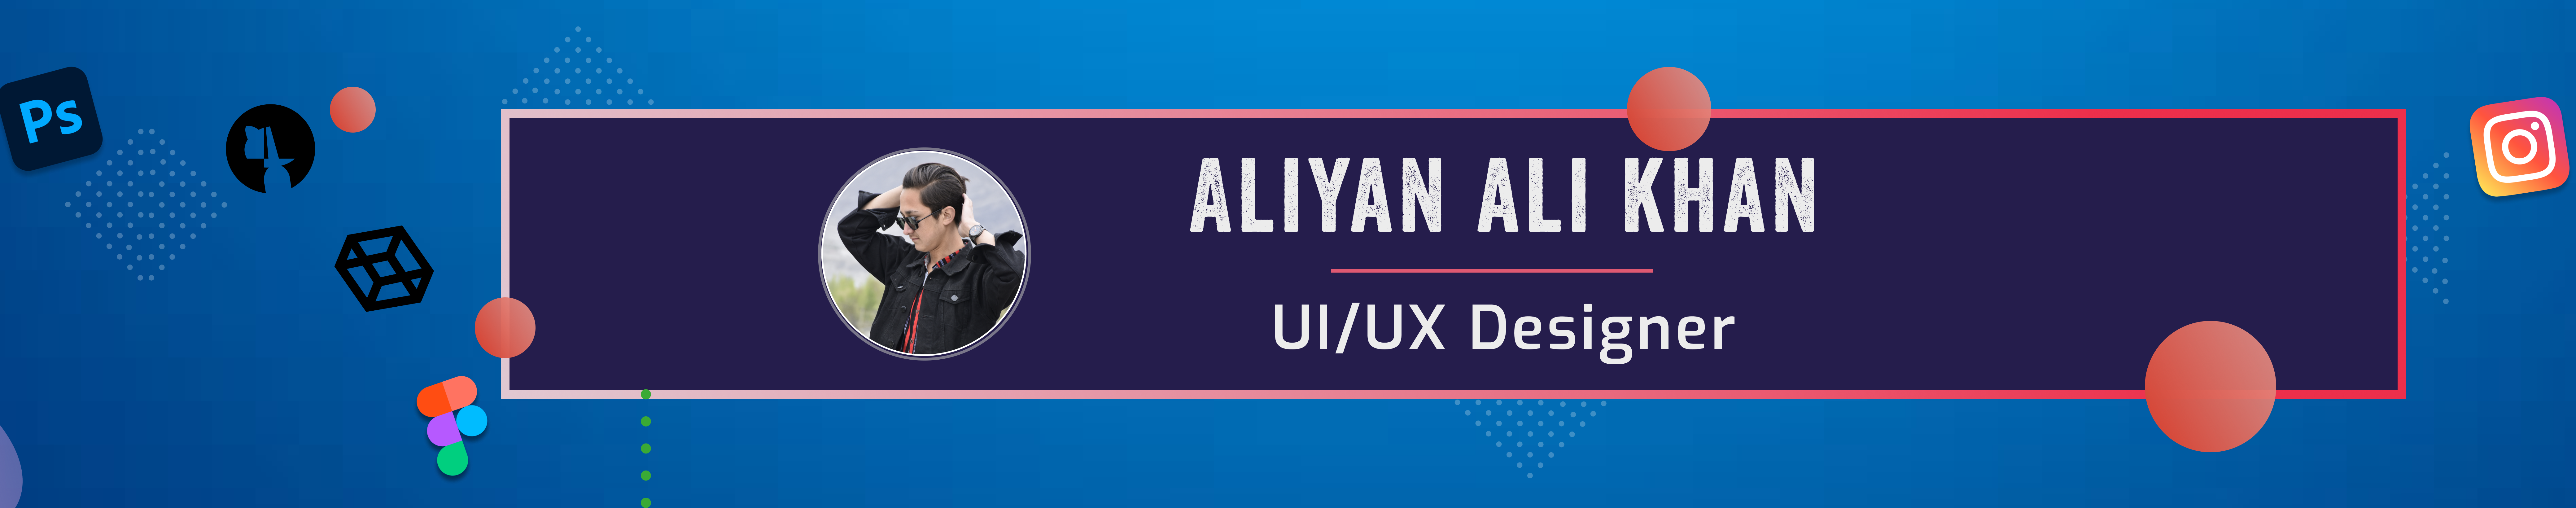 Aliyan Ali Khan ✪'s profile banner